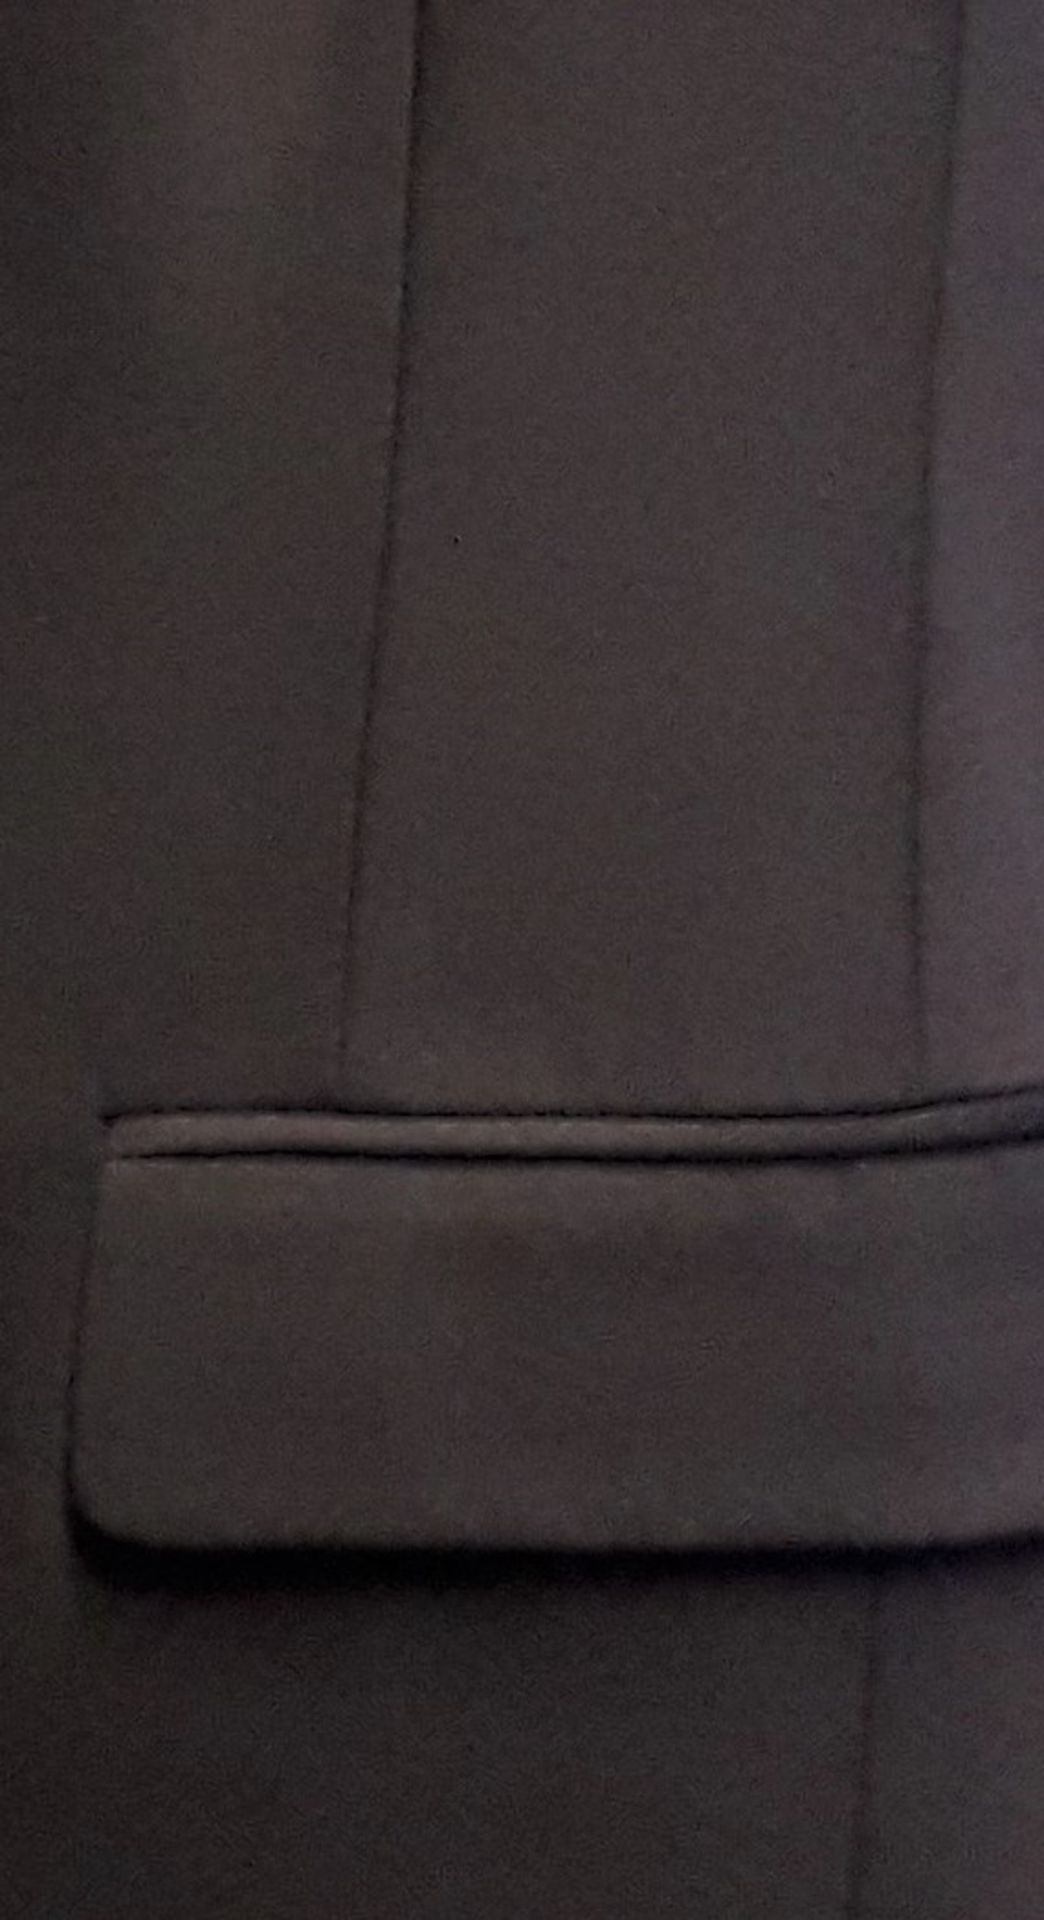 1 x Michael Kors Black Longline Sleeveless Jacket - Size: 10 - Material: 96% Wool, 4% Elastane. - Image 3 of 6